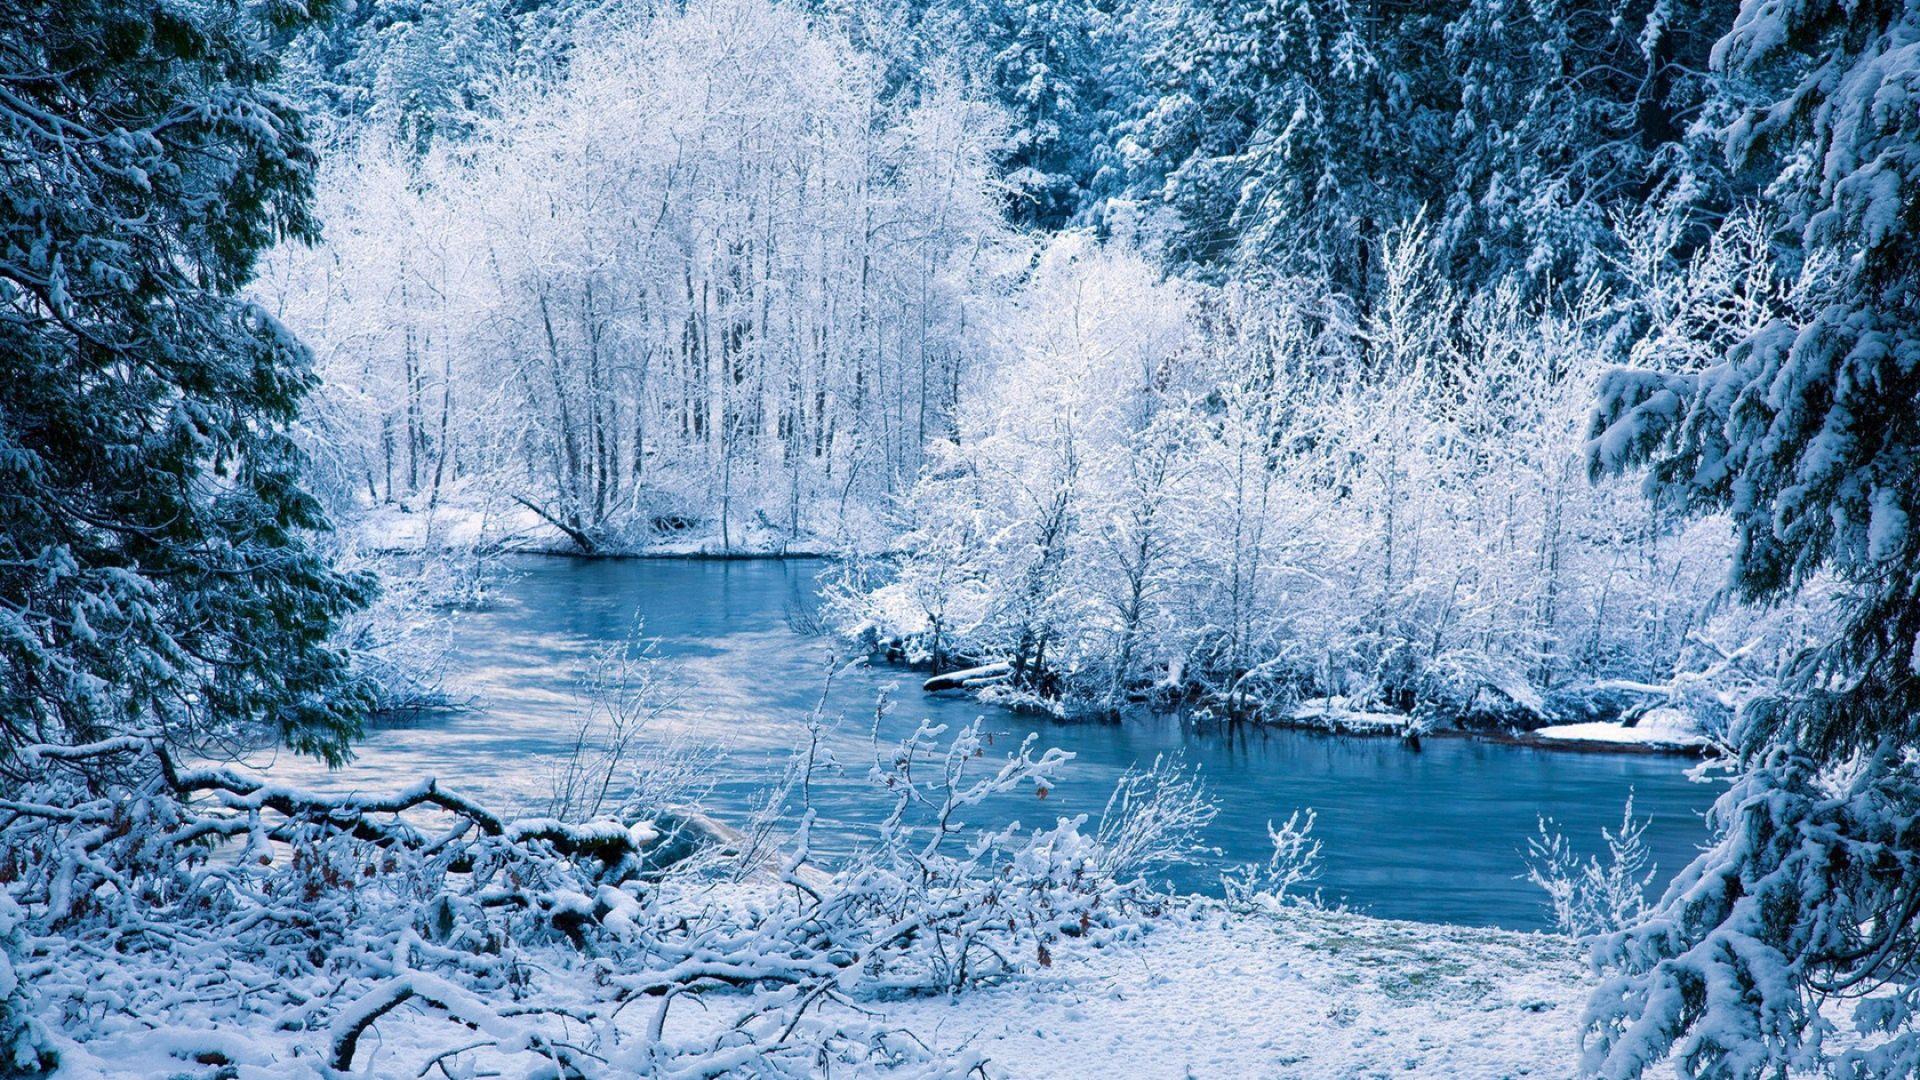 Download Wallpaper 1920x1080 winter, river, snow, trees, landscape